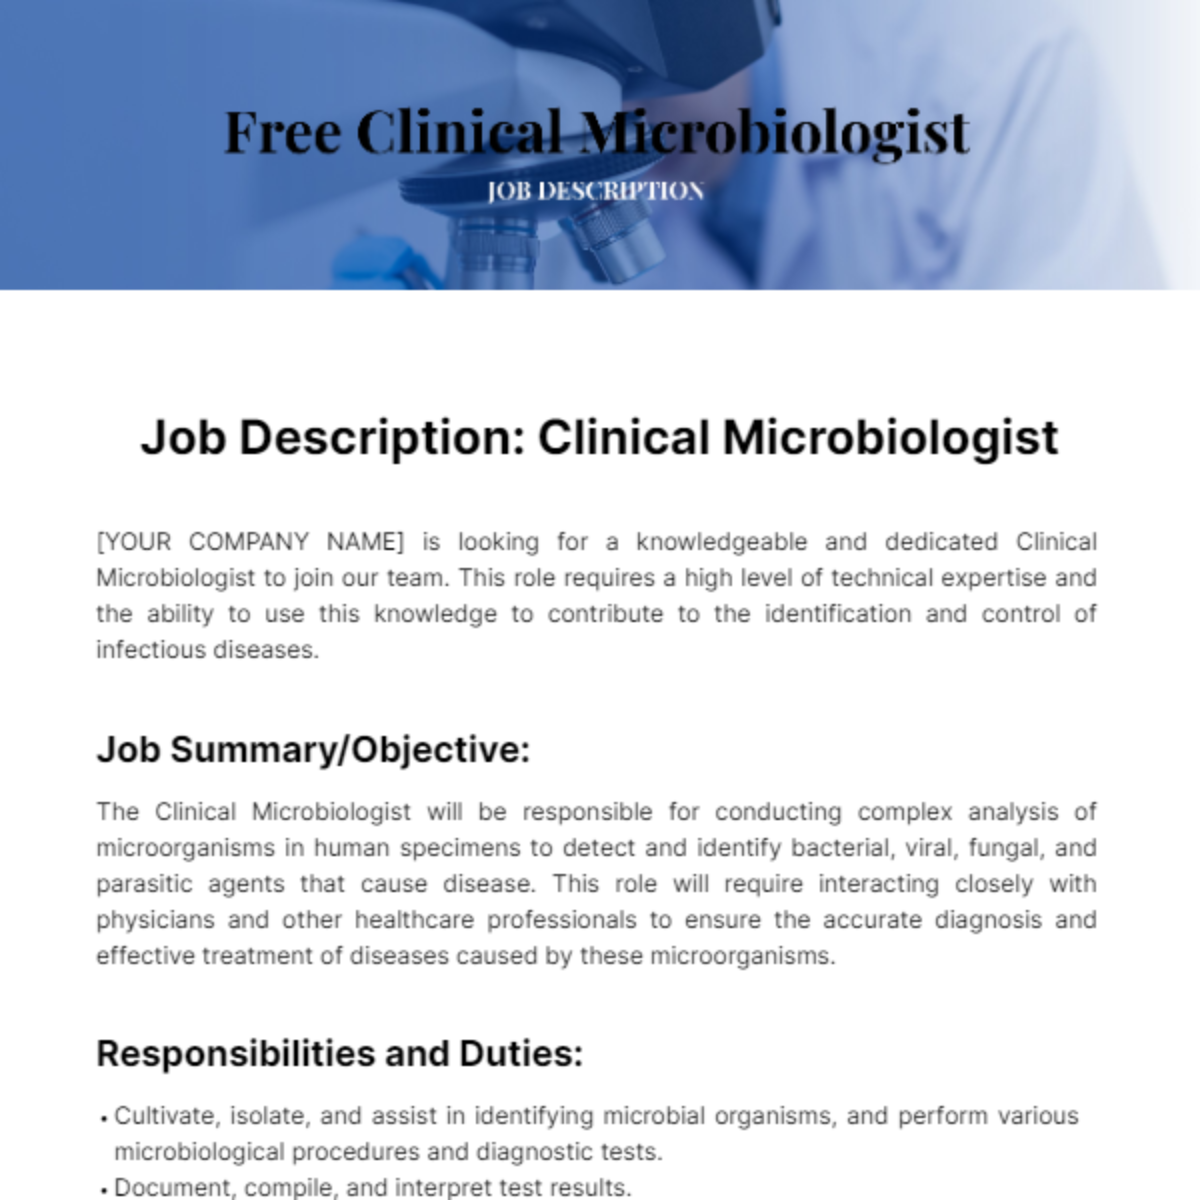 Clinical Microbiologist Job Description Template